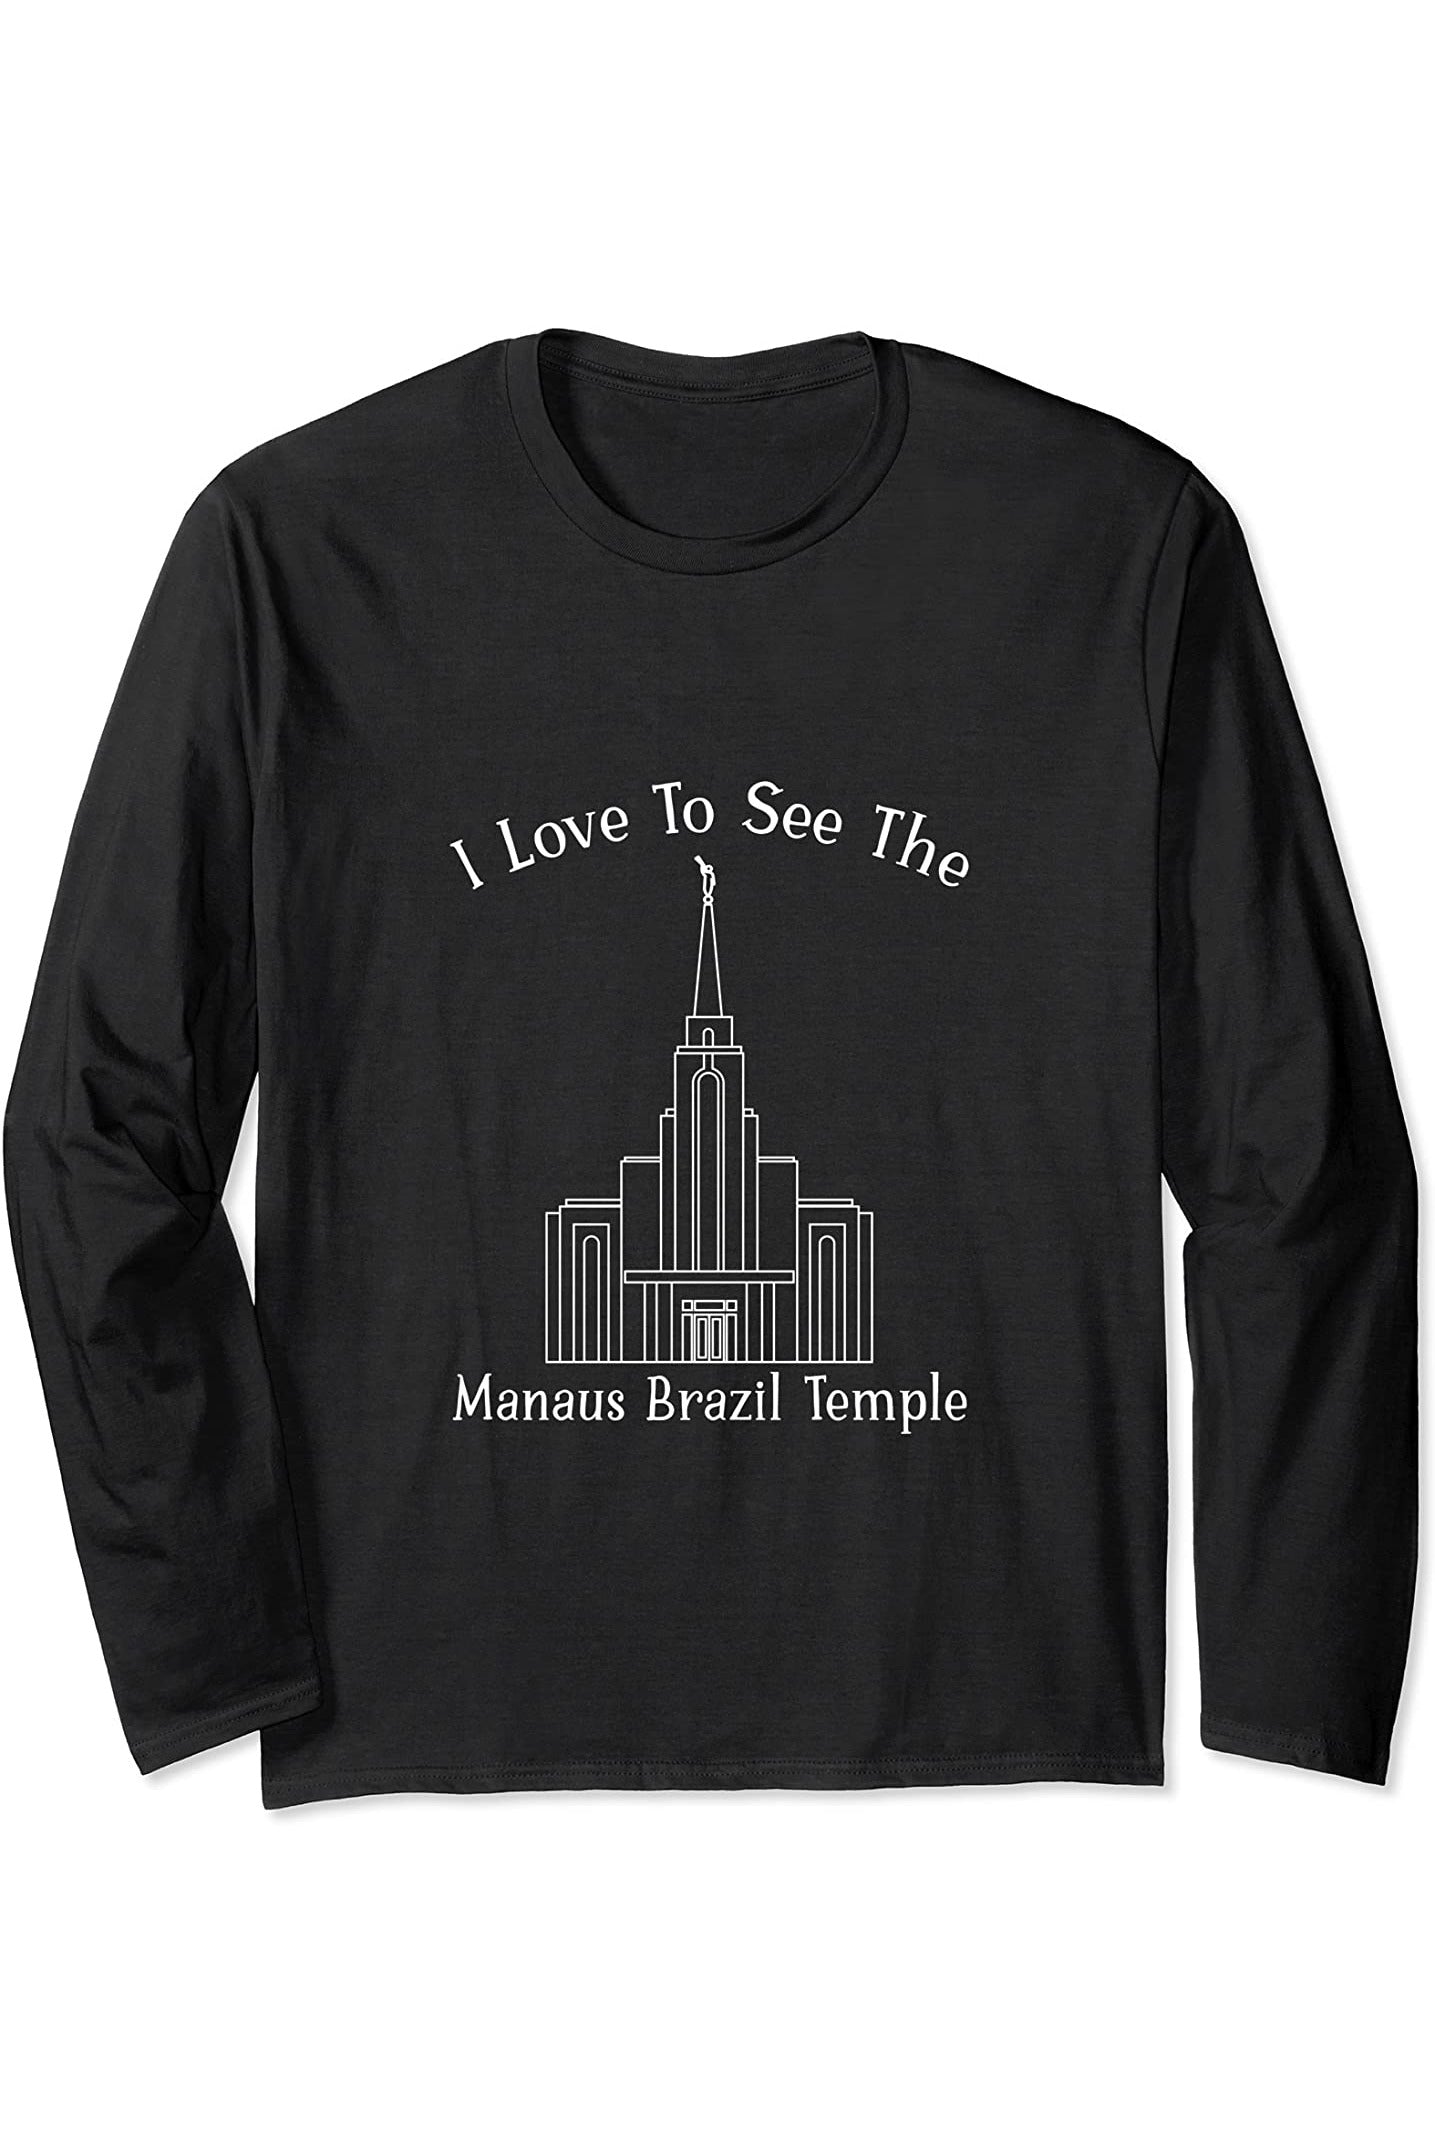 Manaus Brazil Temple Long Sleeve T-Shirt - Happy Style (English) US